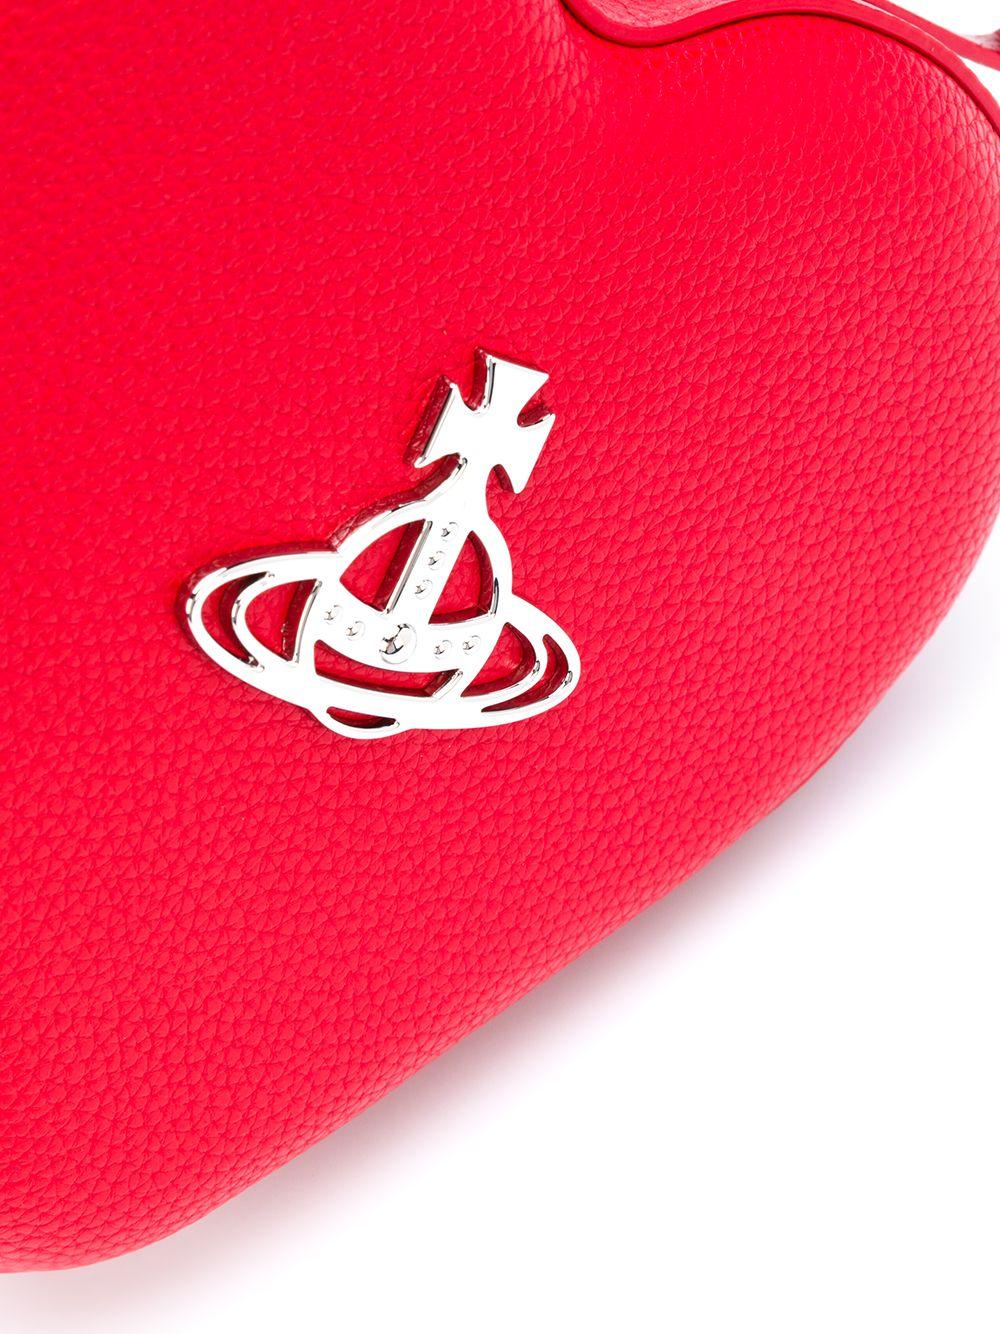 Cross body bags Vivienne Westwood - Johanna Heart crossbody bag in red -  4303001801229H401